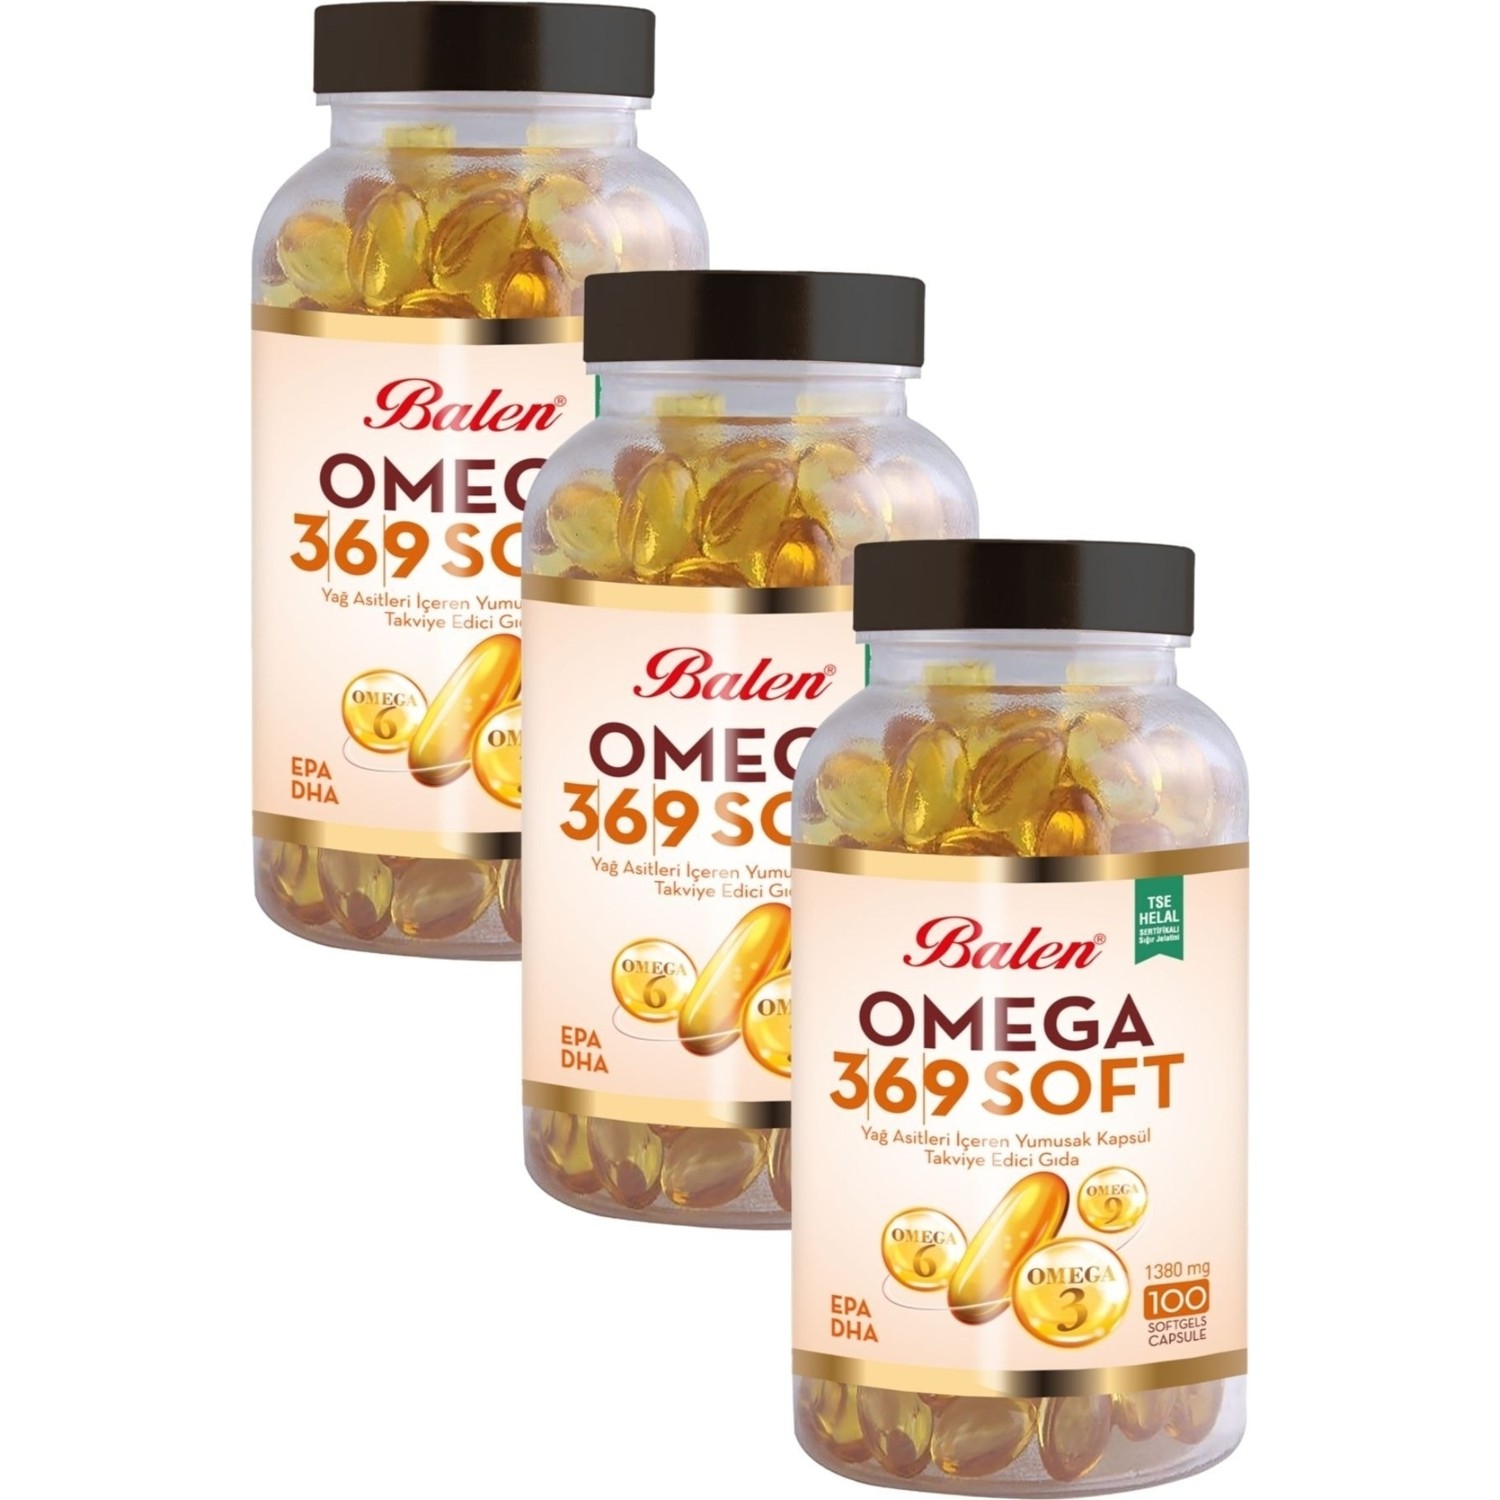 Рыбий жир Balen Omega 3-6-9, 100 капсул, 1380 мг, 3 штуки